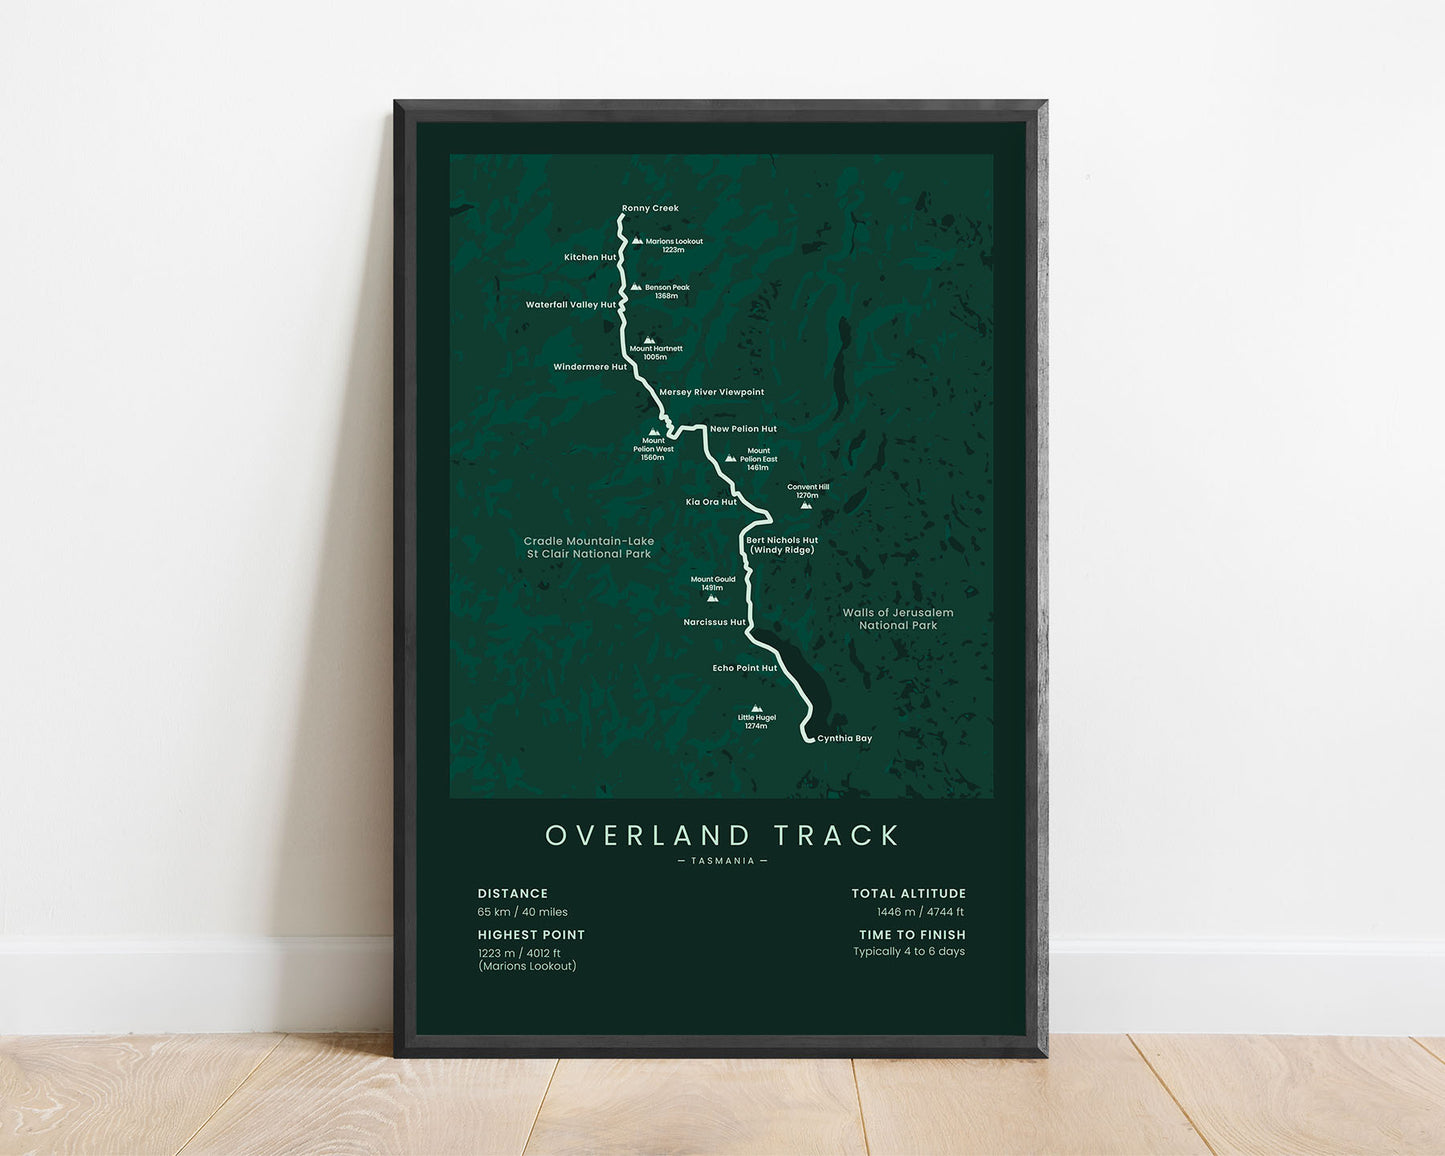 Overland Trail (Australia) hiking trail print with green background